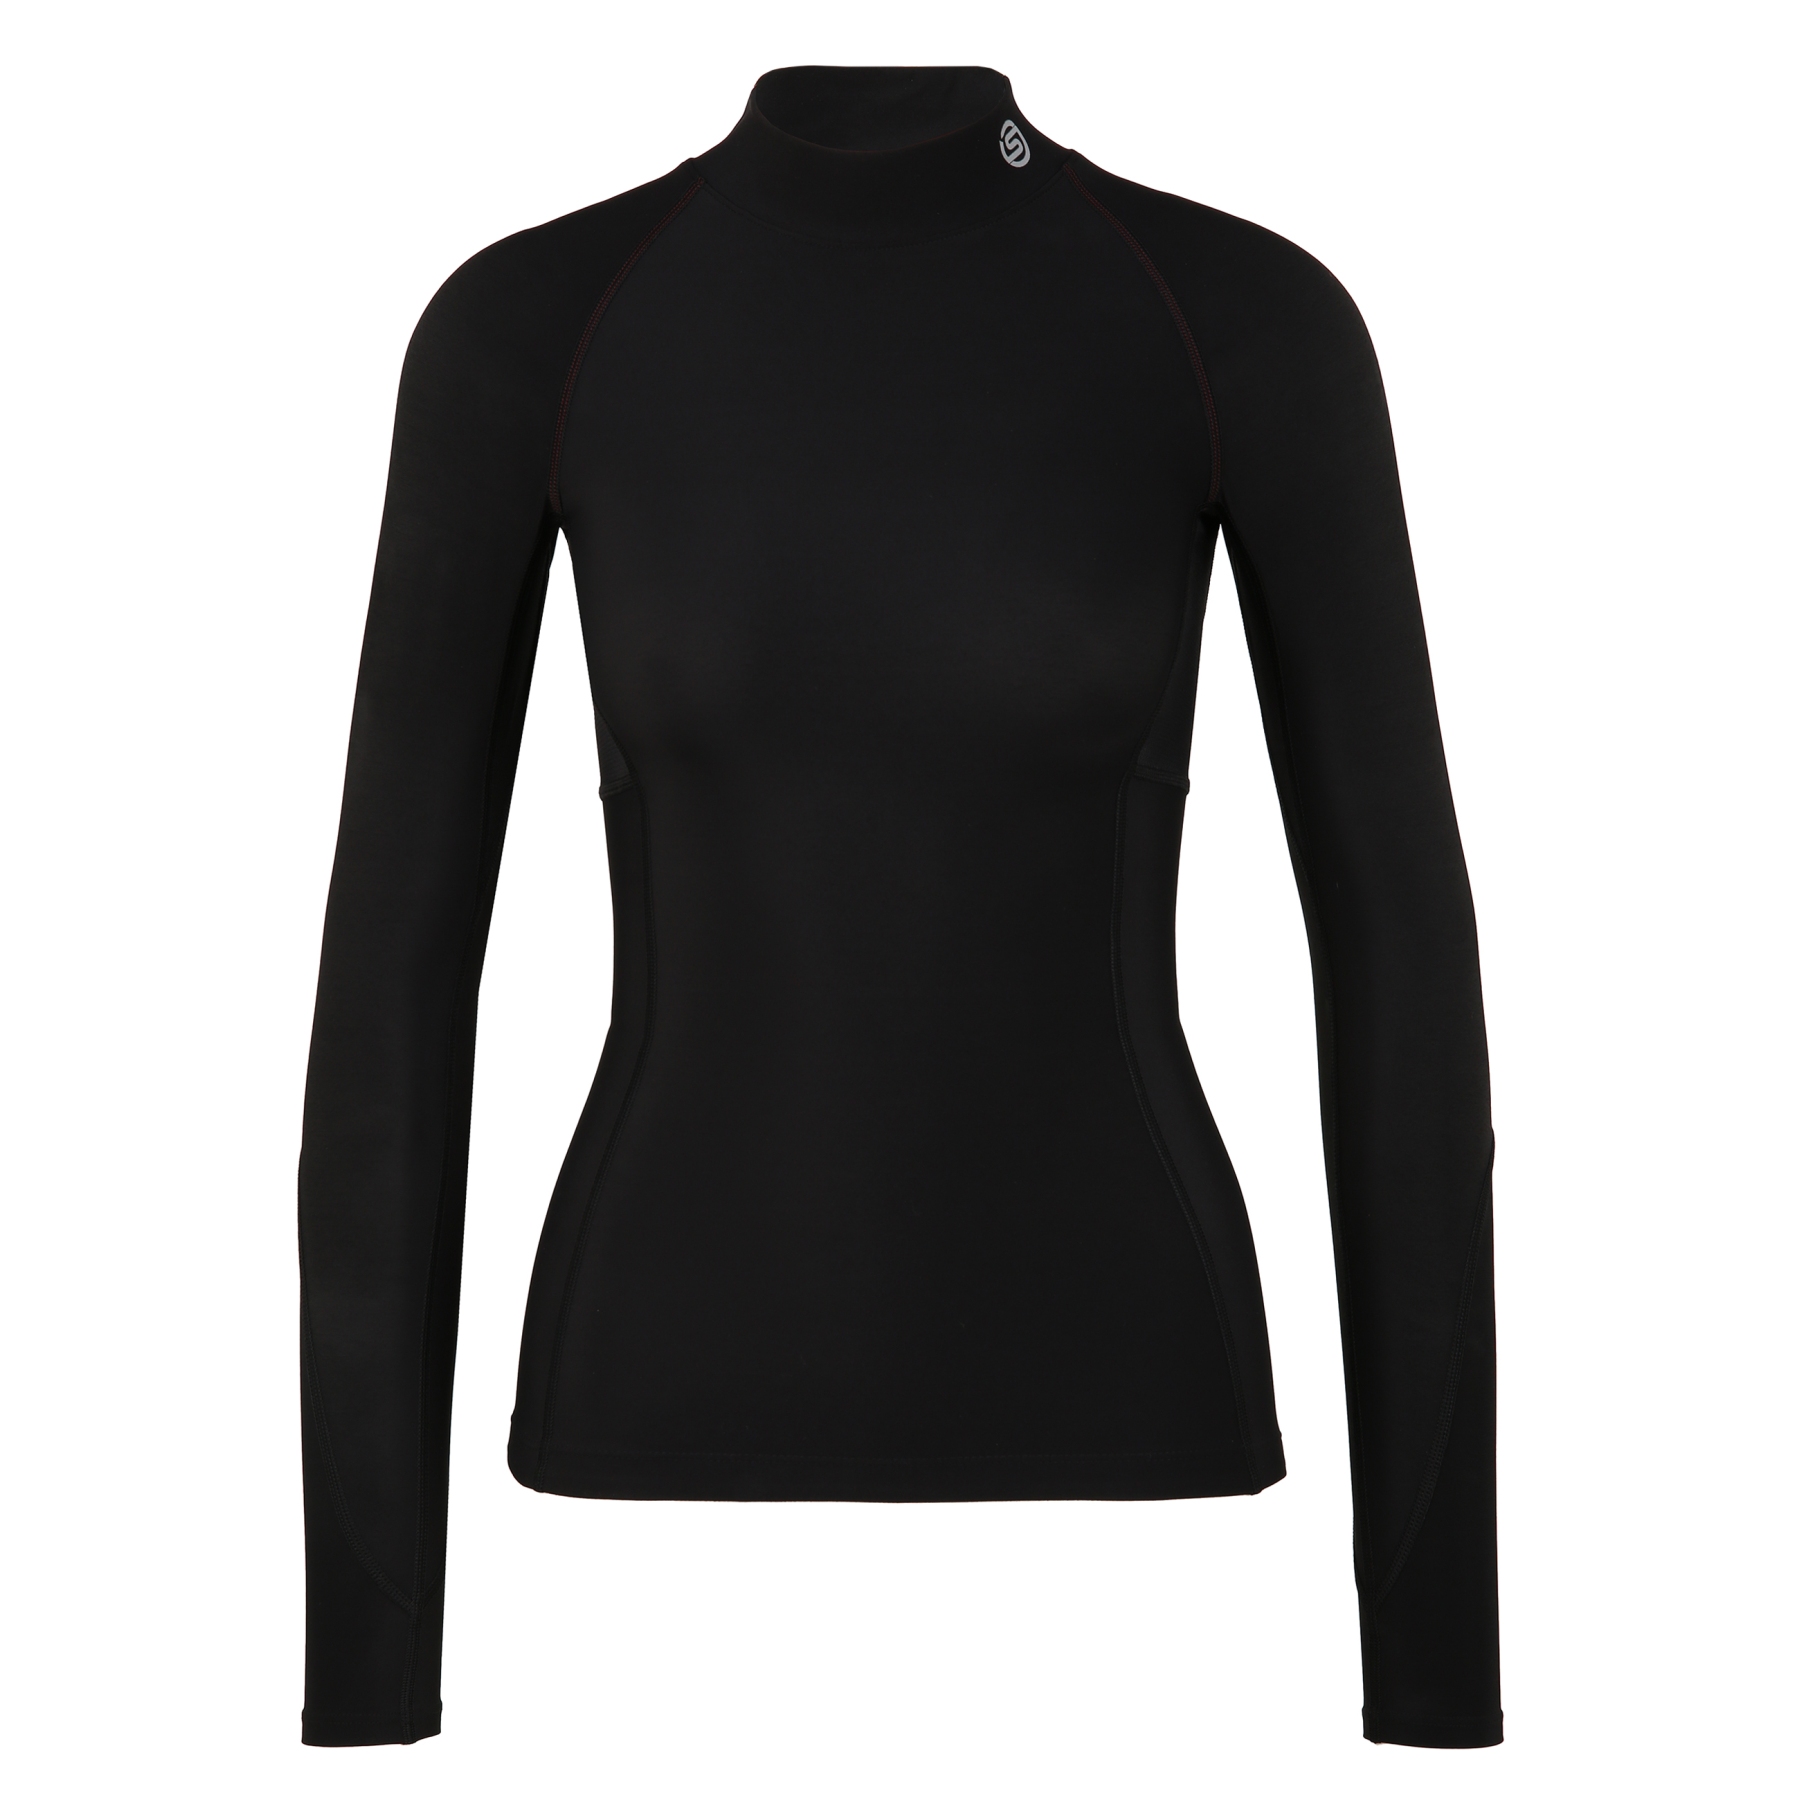 https://images.bike24.com/i/mb/d5/8a/5b/skins-compression-3-series-women-thermal-long-sleeve-top-black-1-892886.jpg